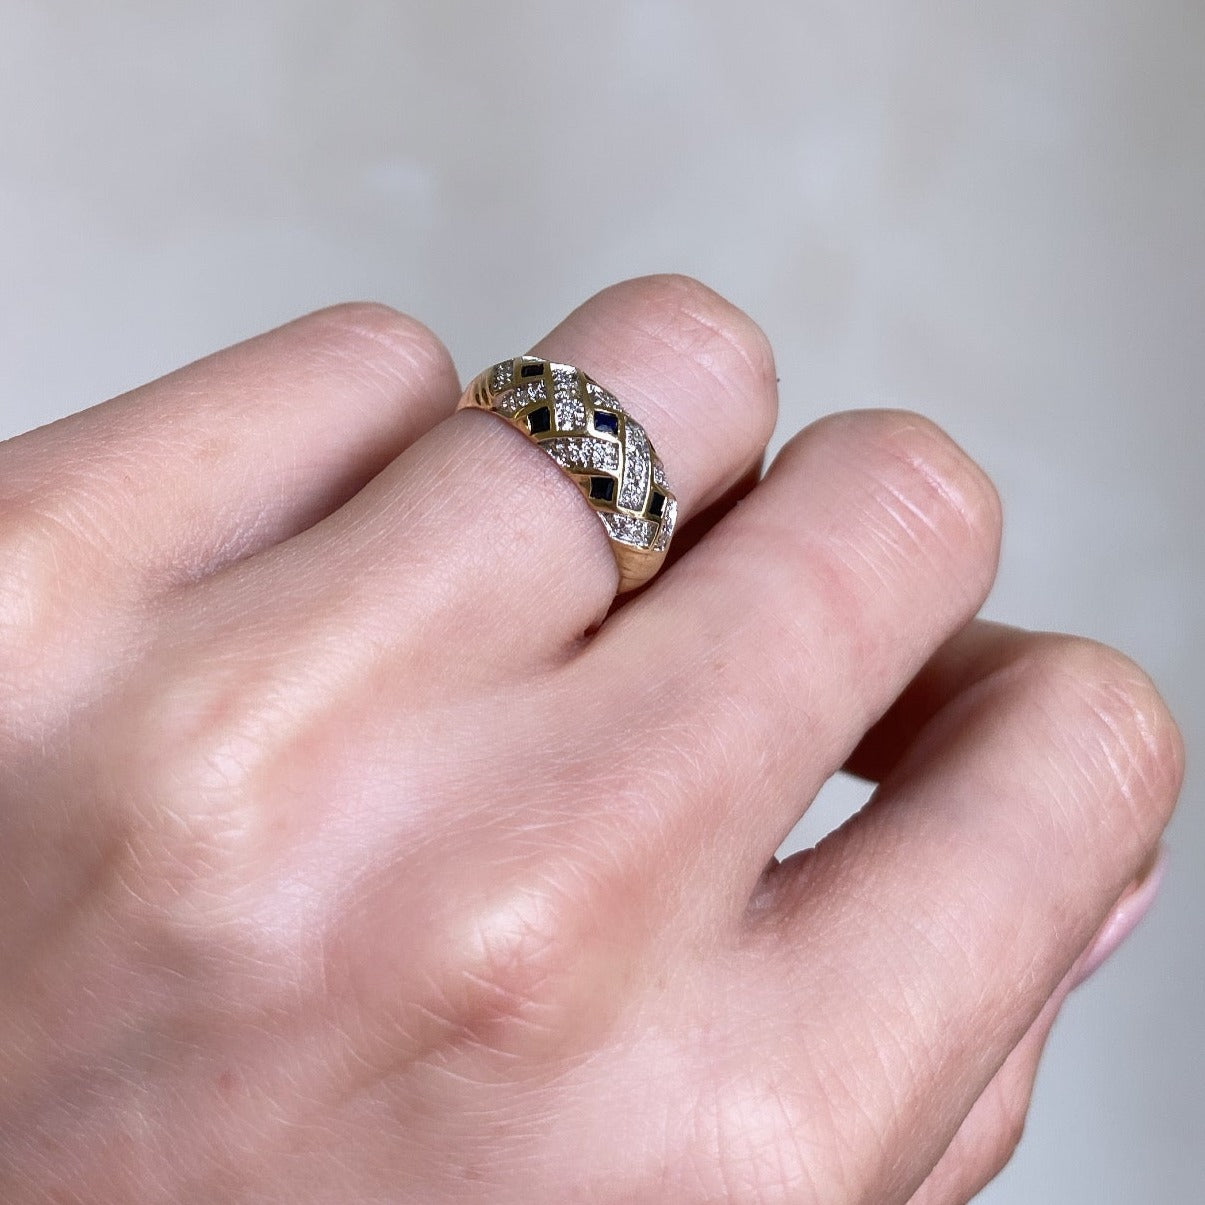 Art Deco Diamonds & Sapphire Ring